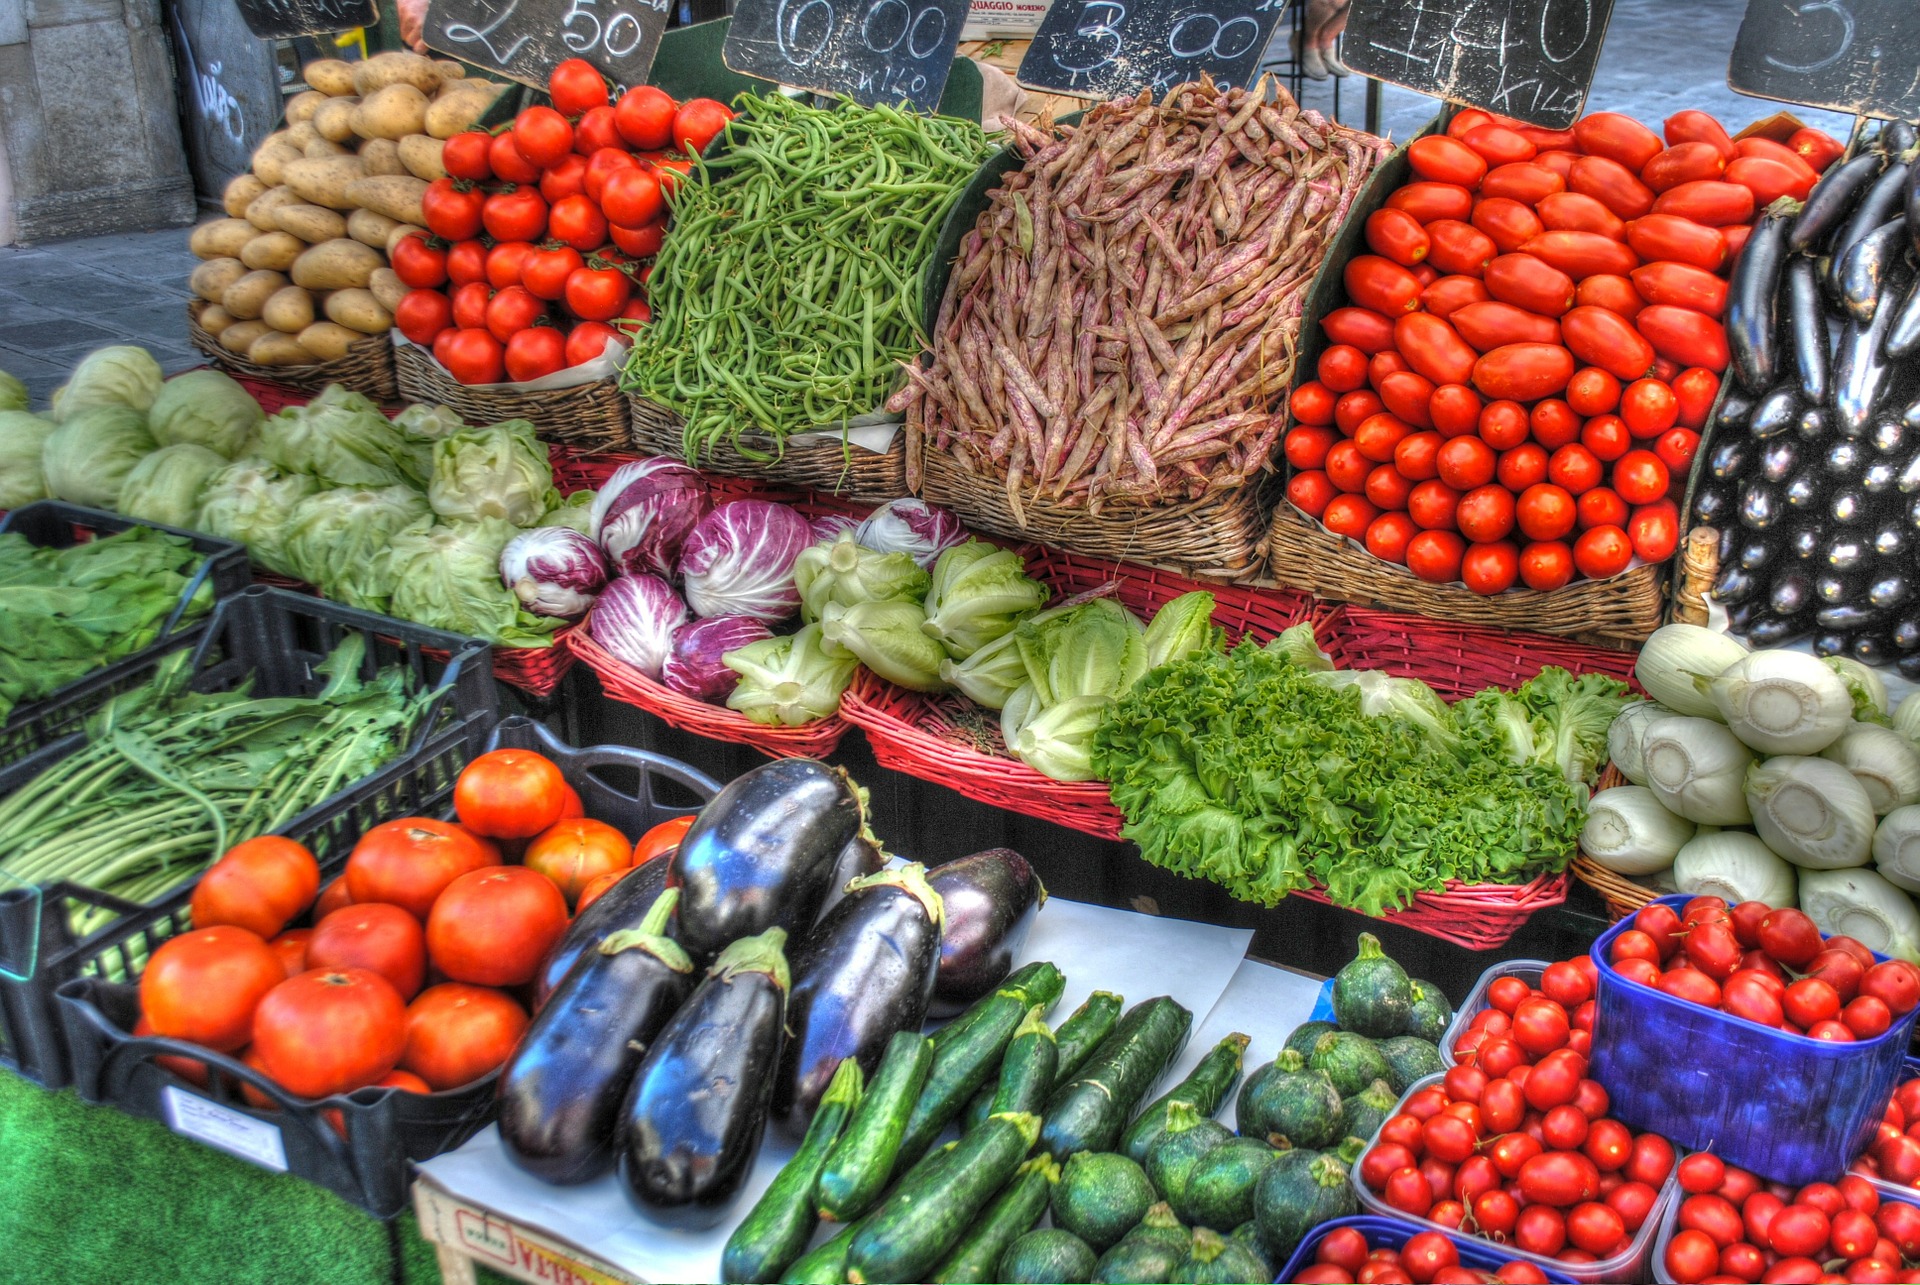 Government, media blame climate change for skyrocketing vegetable prices